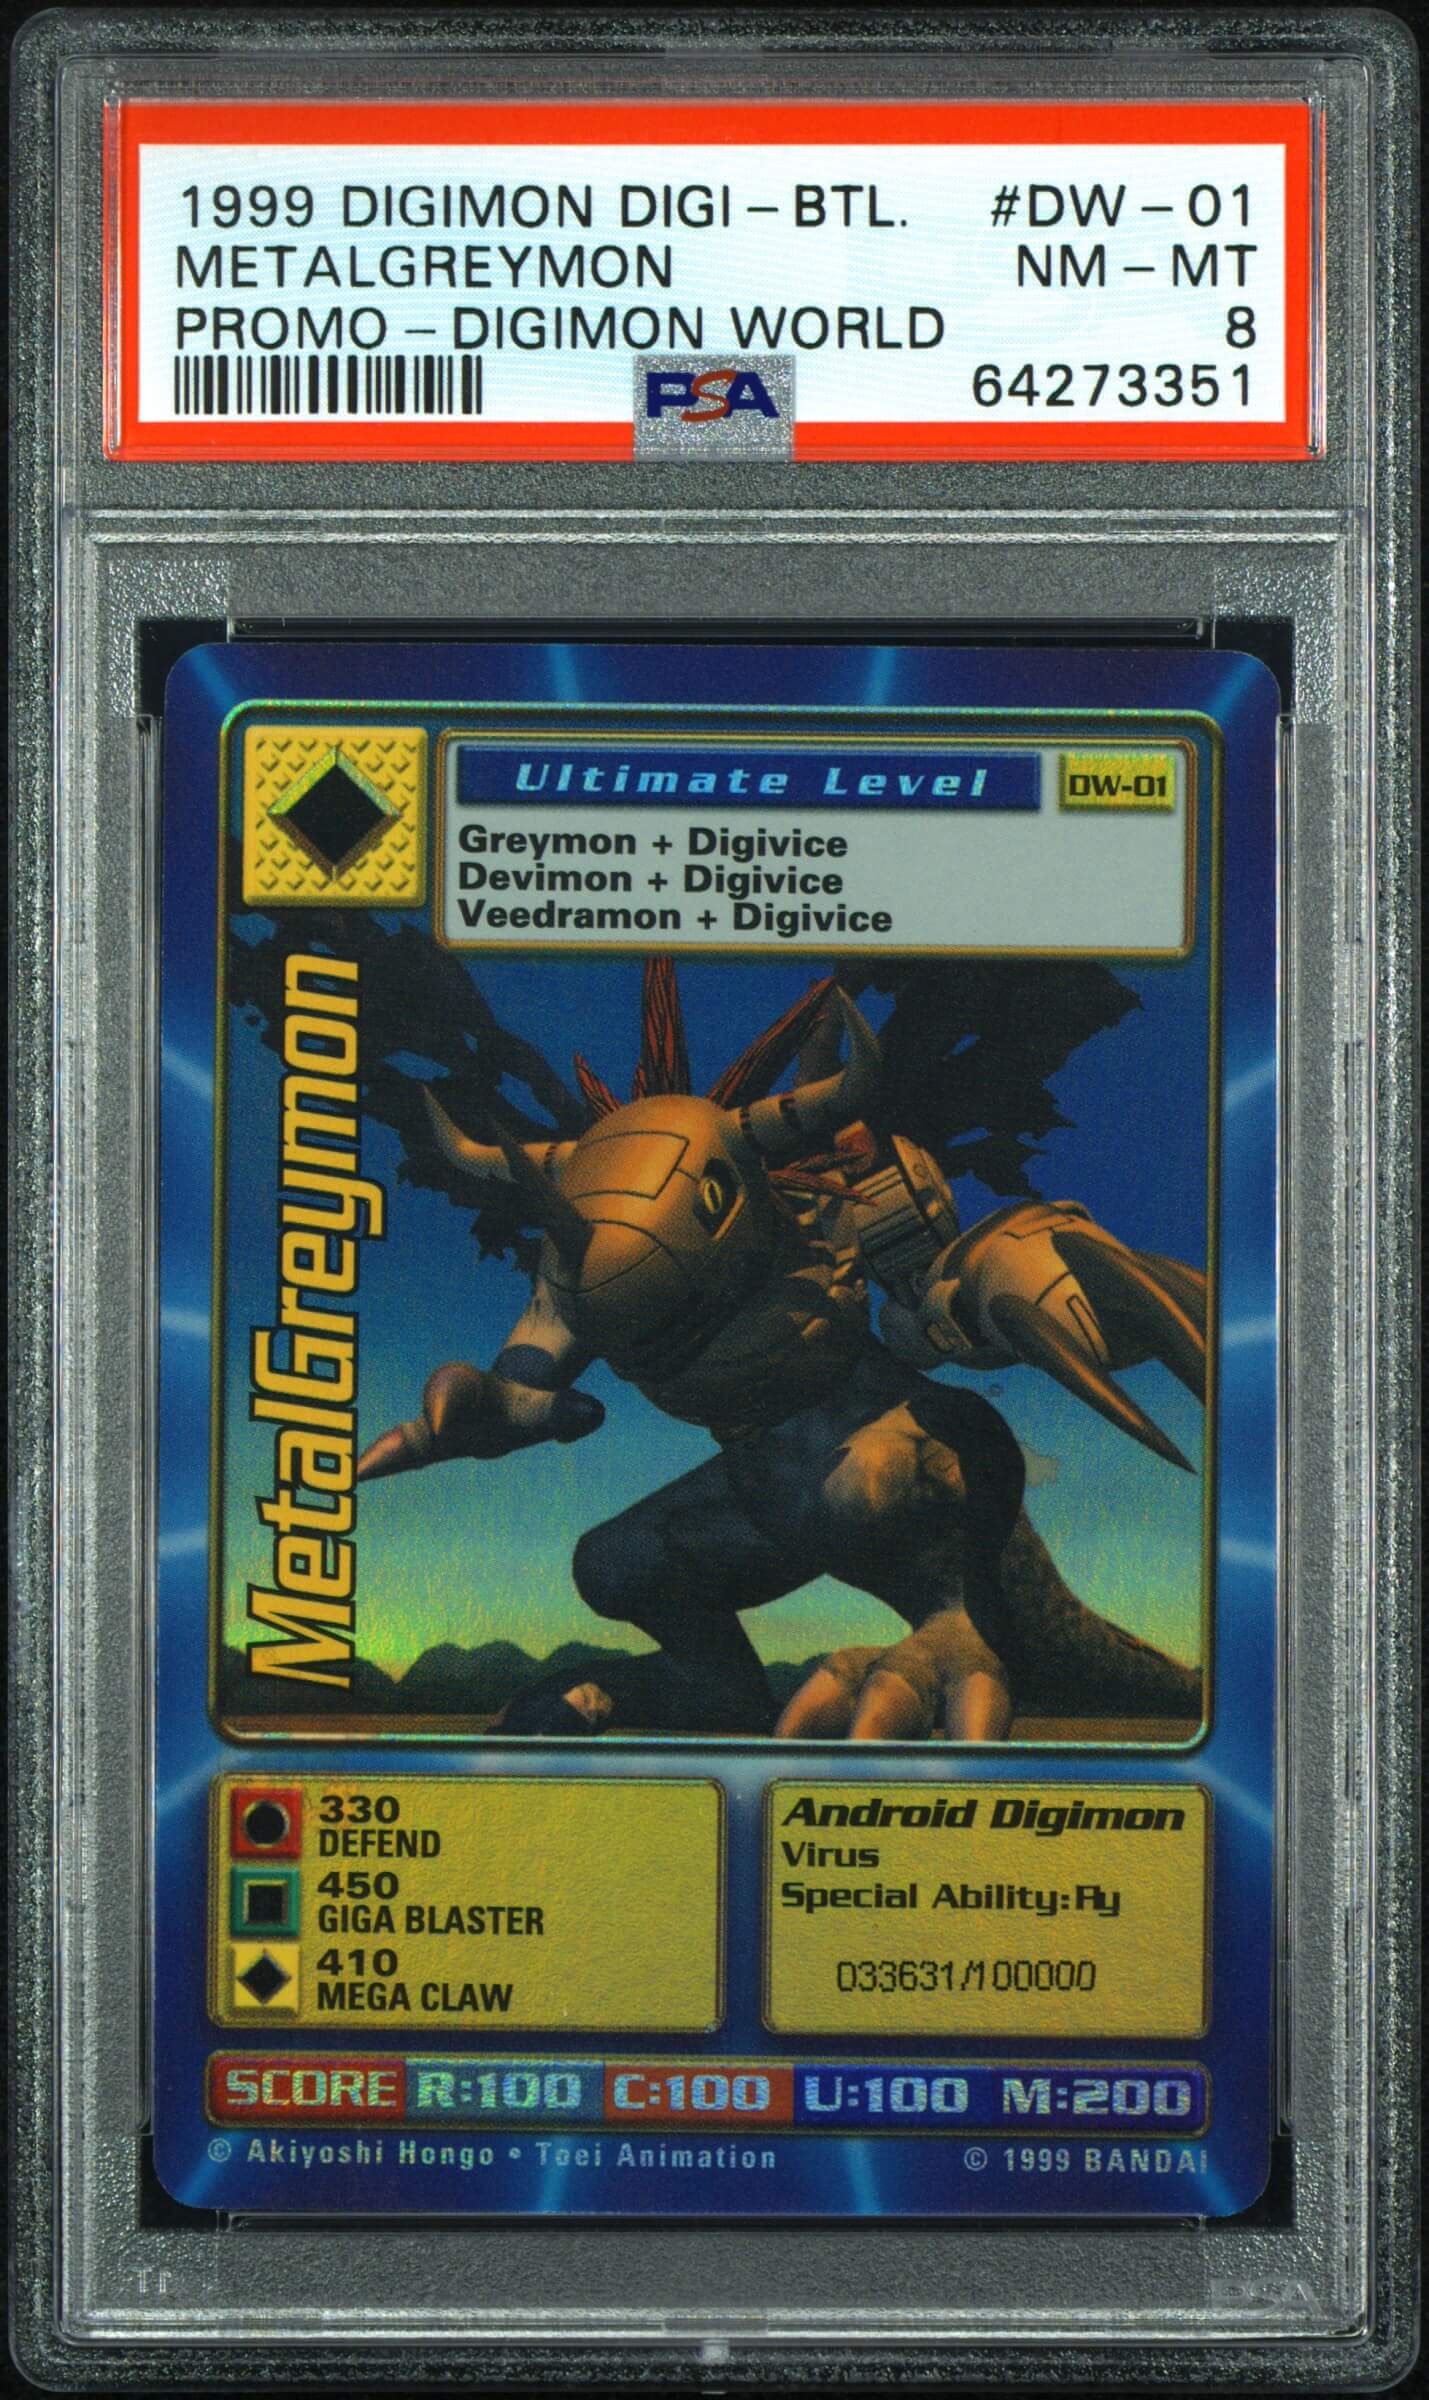 Digimon World PlayStation Promo DW-01 MetalGreymon - number 033631 / 100,000